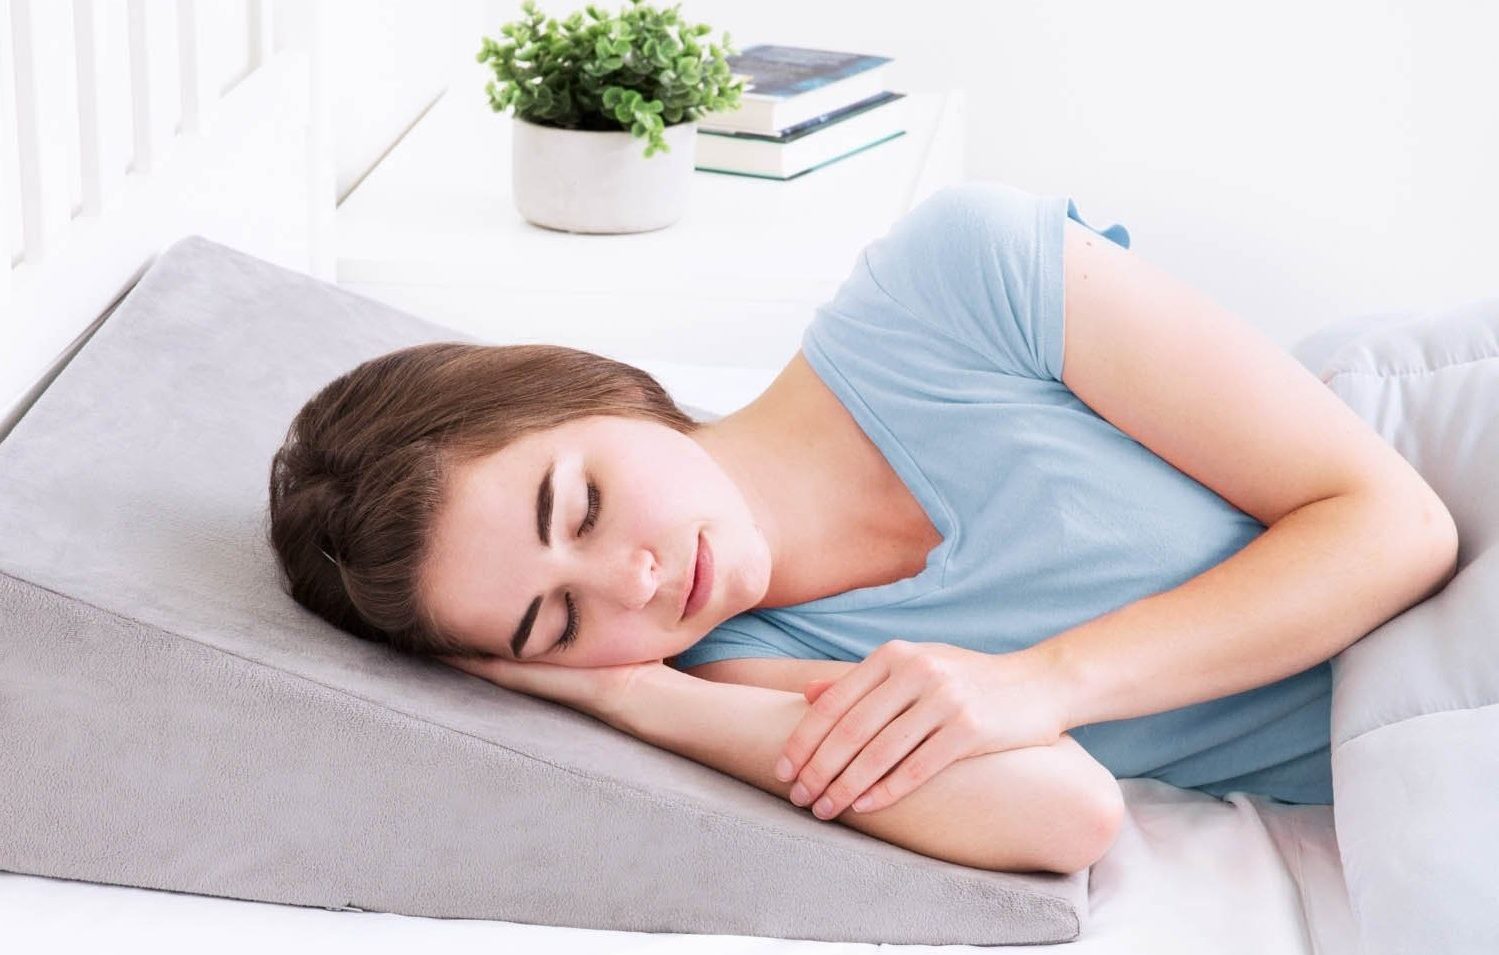 Christina sleeping on a pillow for apnea and snoring.